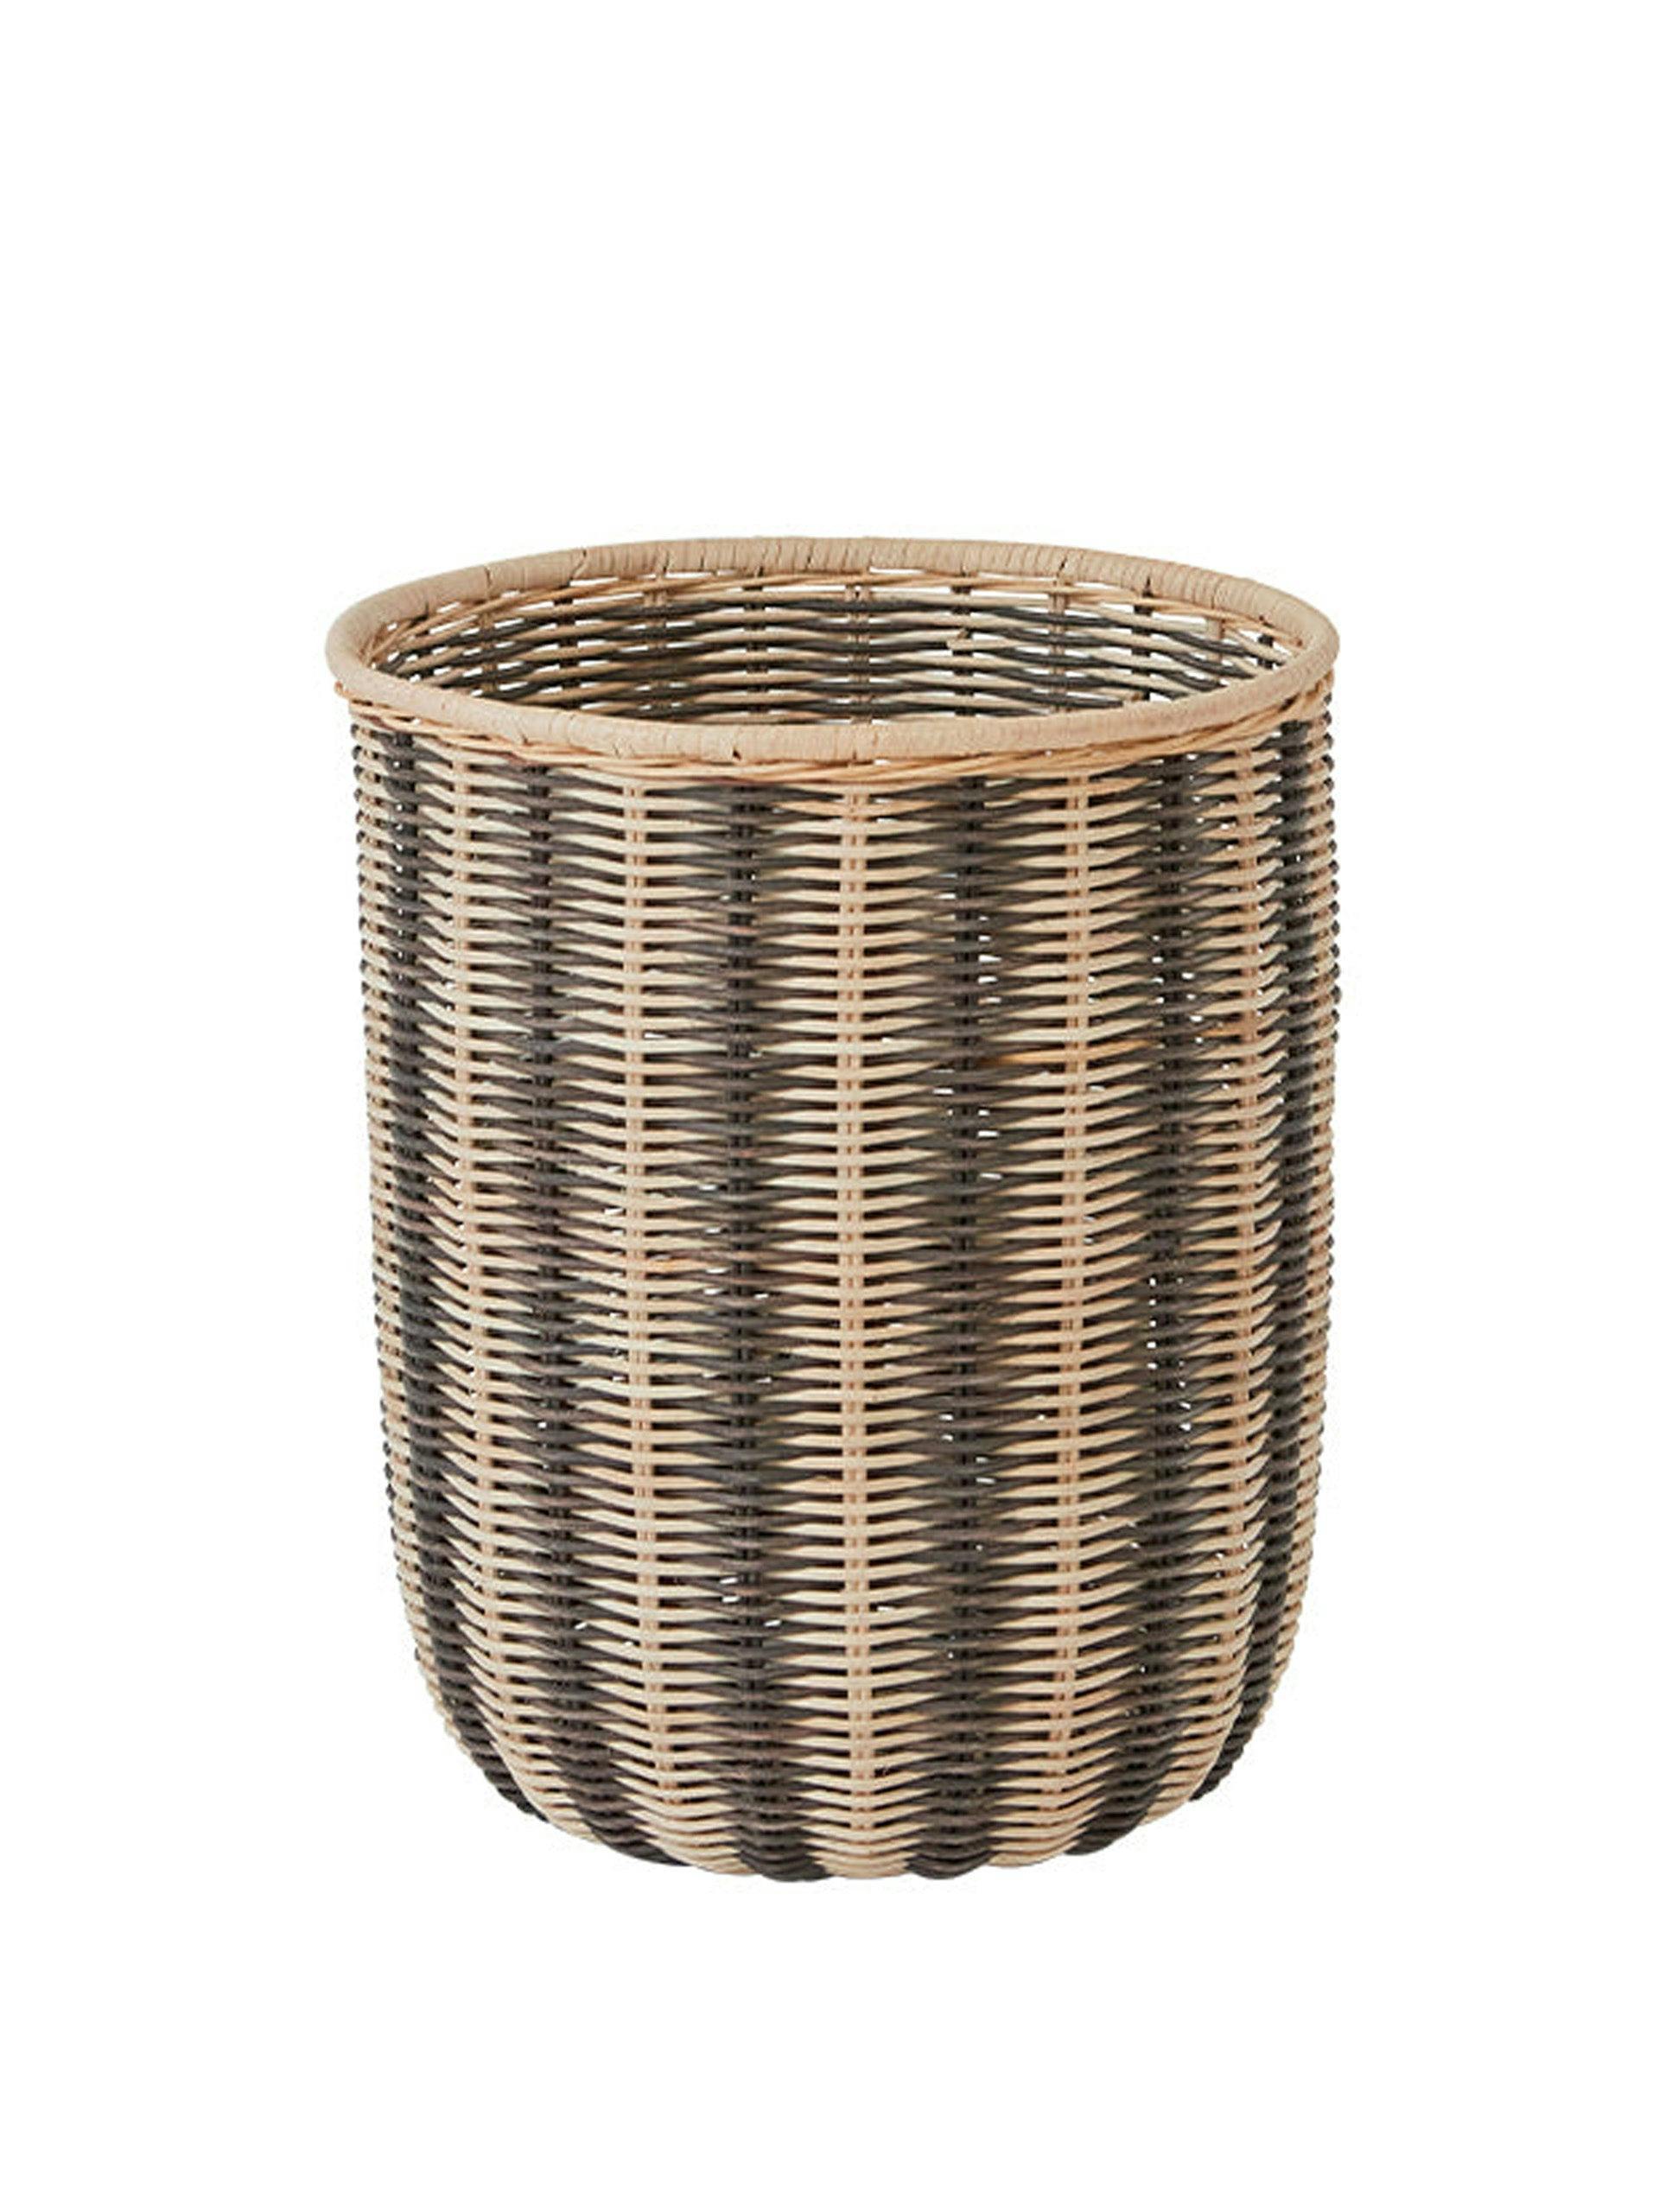 Striped storage basket